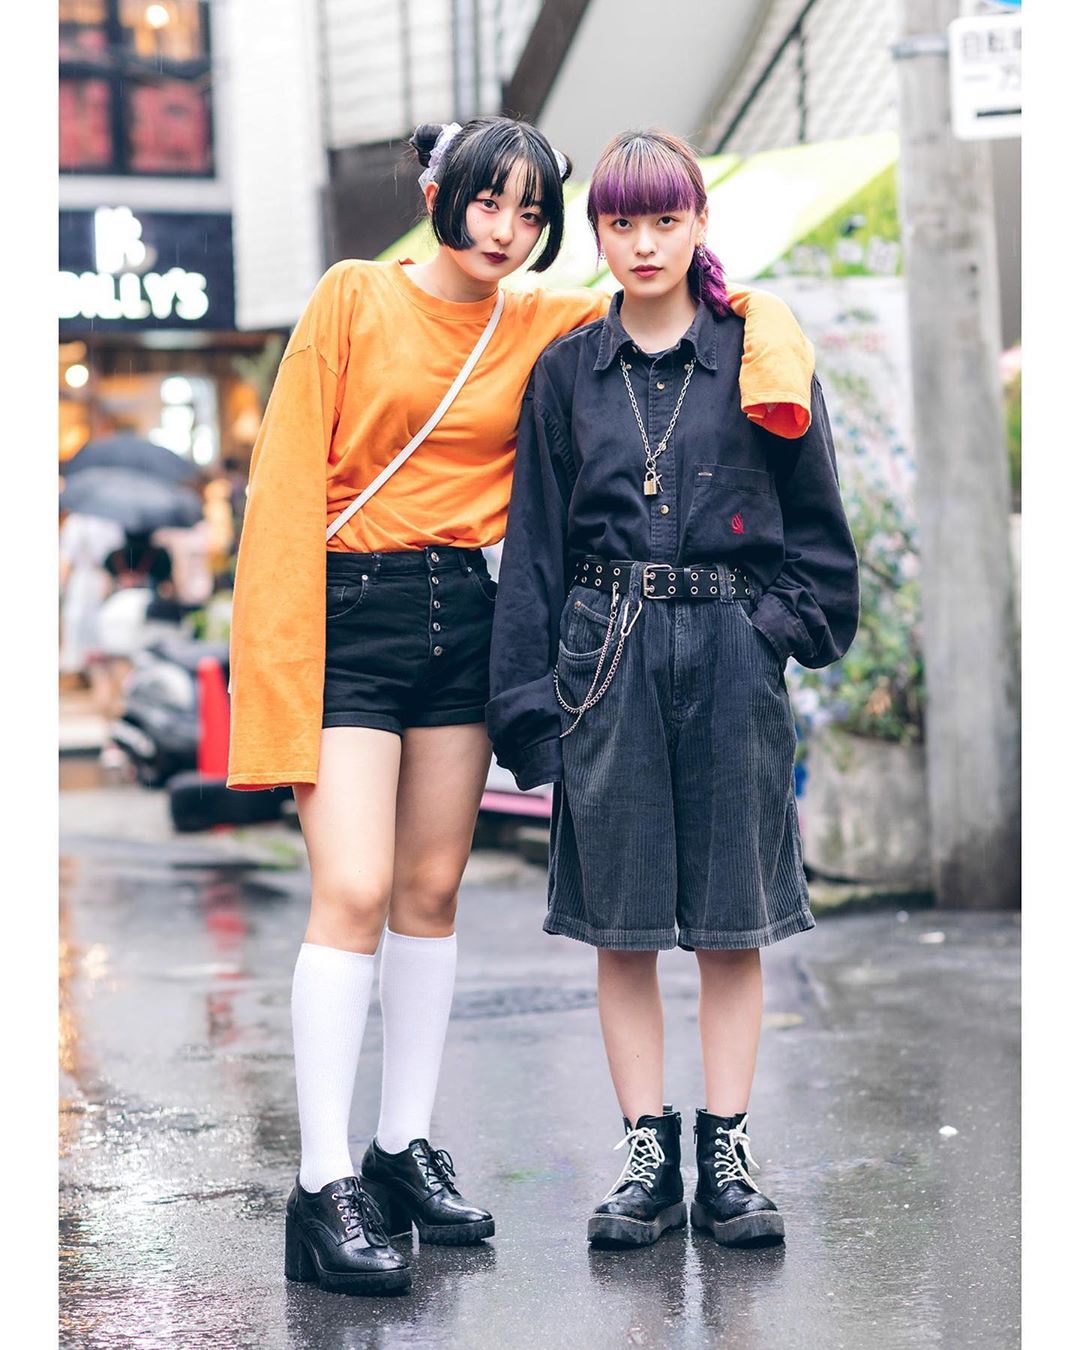 Tokyo Fashion on X: 17-year-old Japanese student Daiki on the